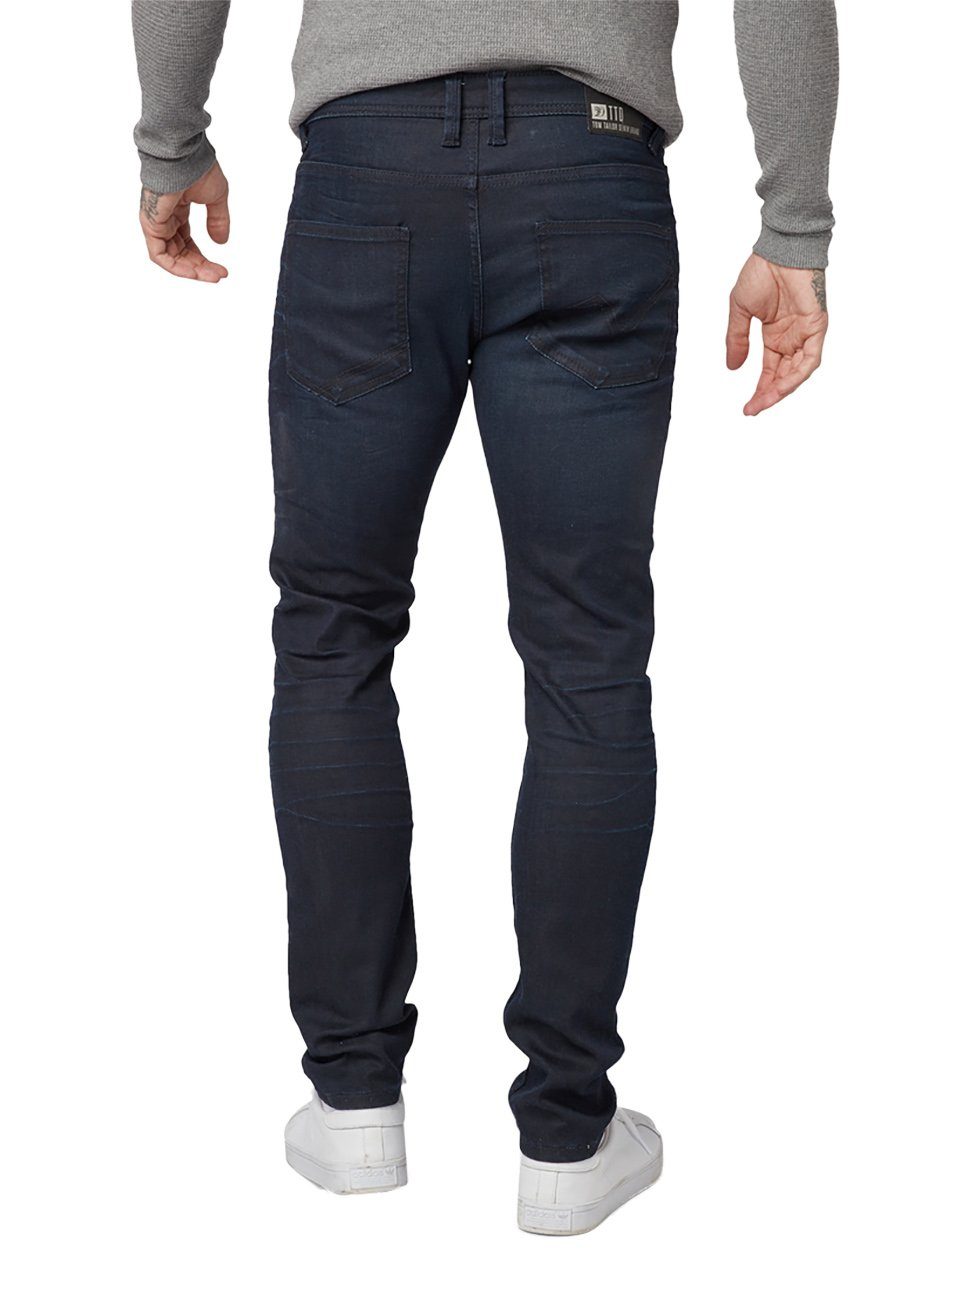 Piers Denim TAILOR TOM Stretch mit Jeanshose Slim-fit-Jeans